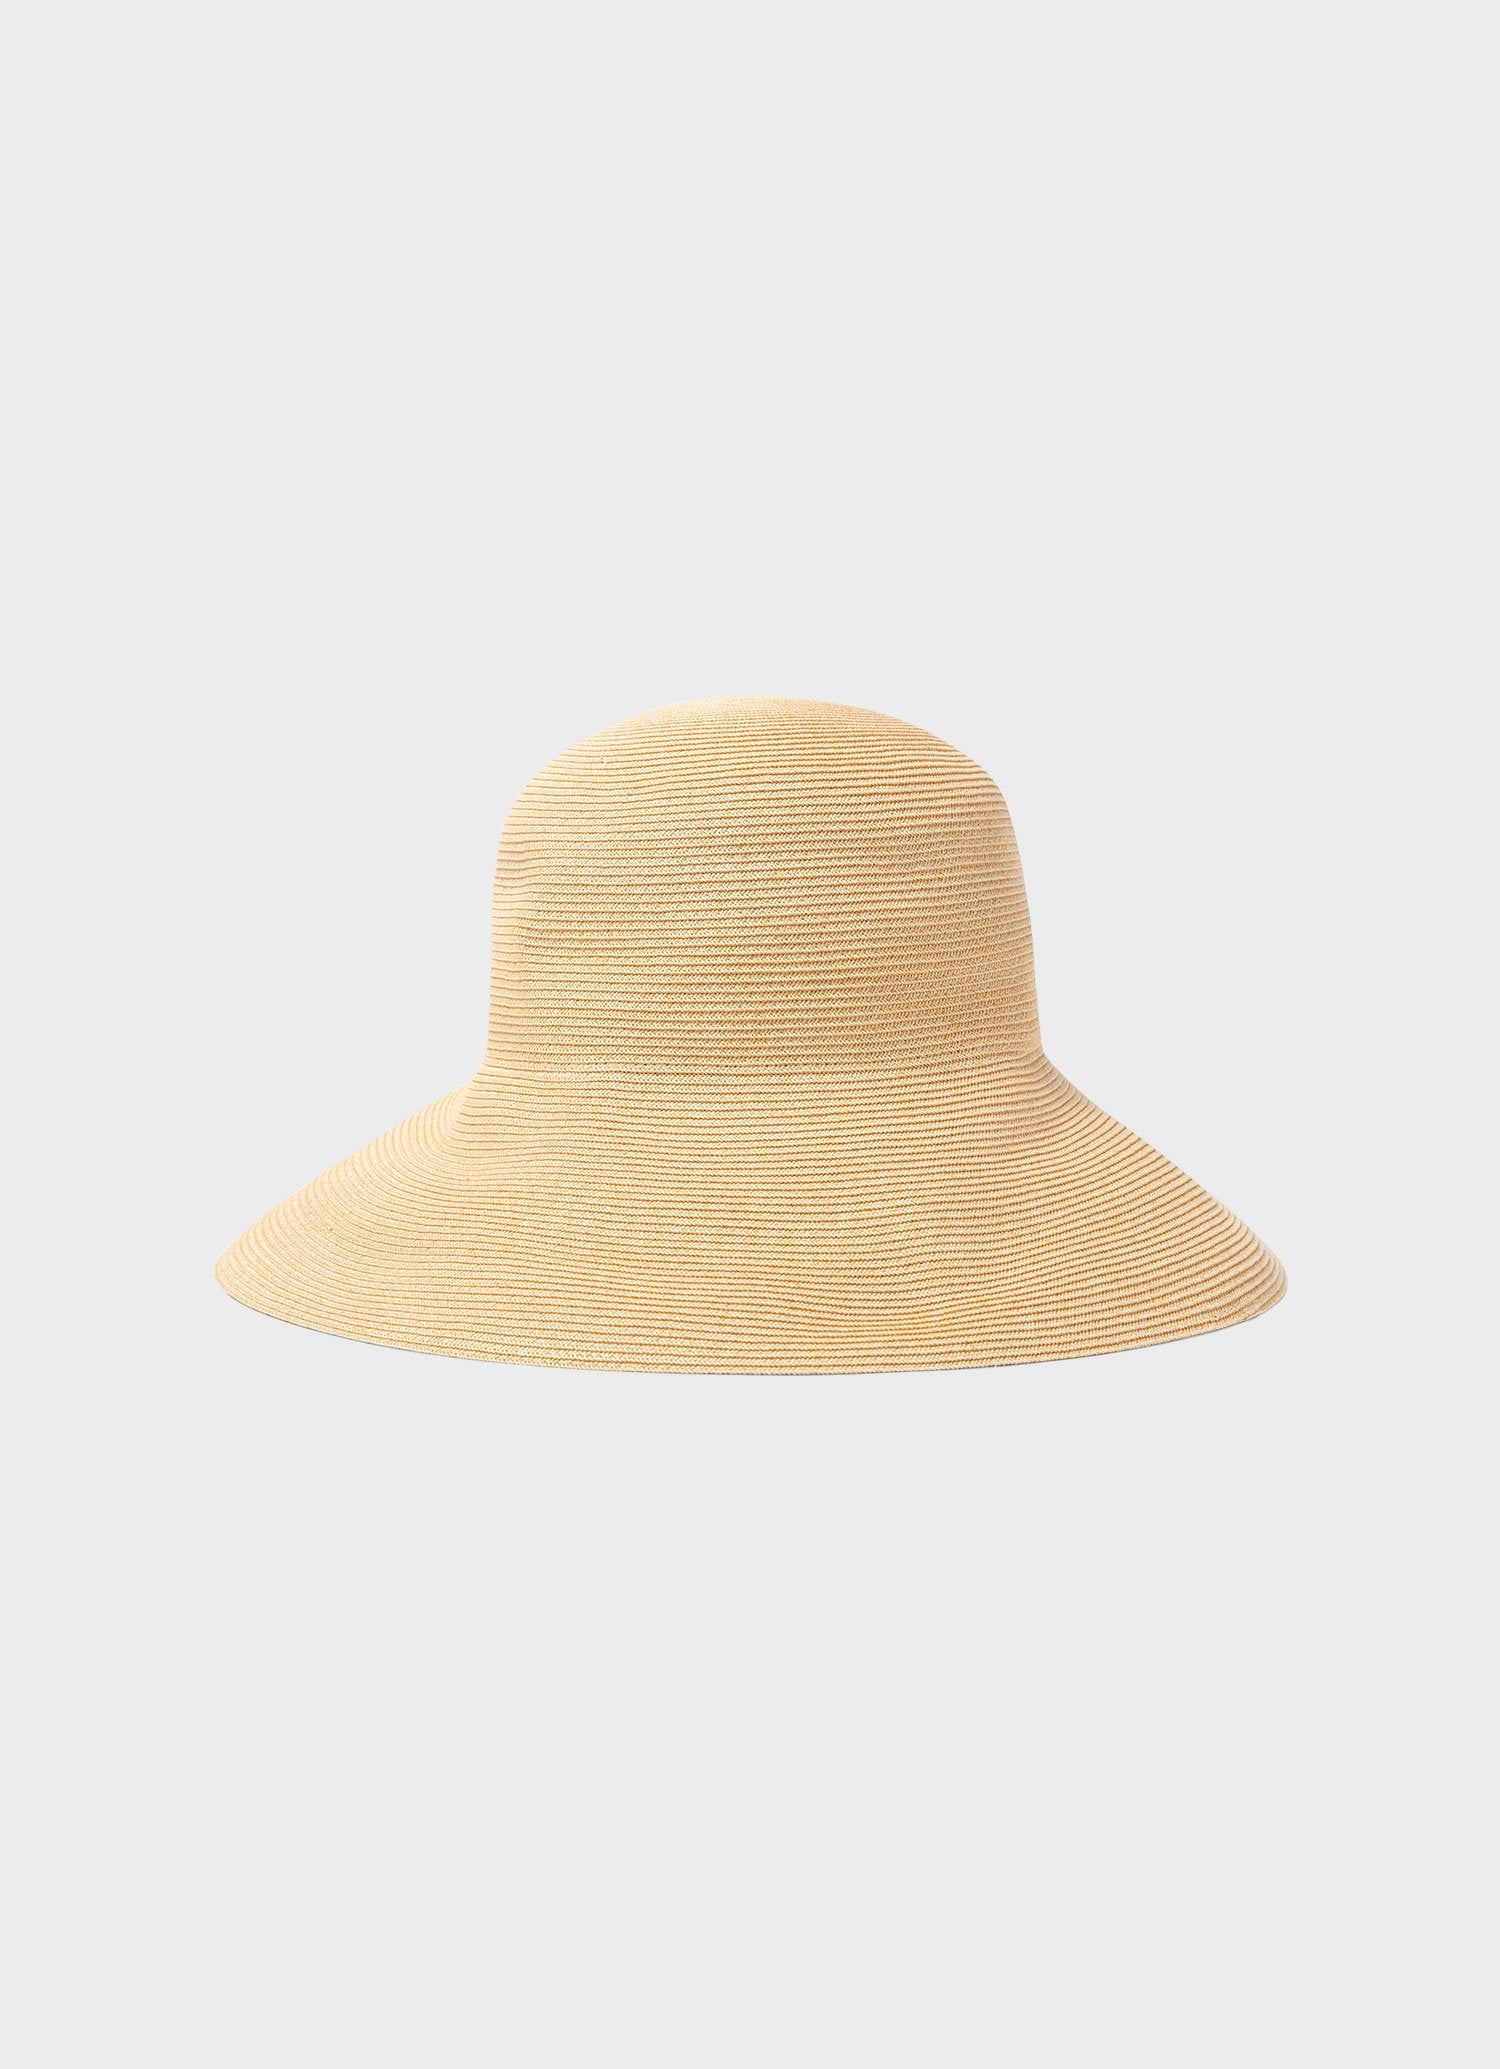 Sunspel x Kijima Takayuki Paper Hat